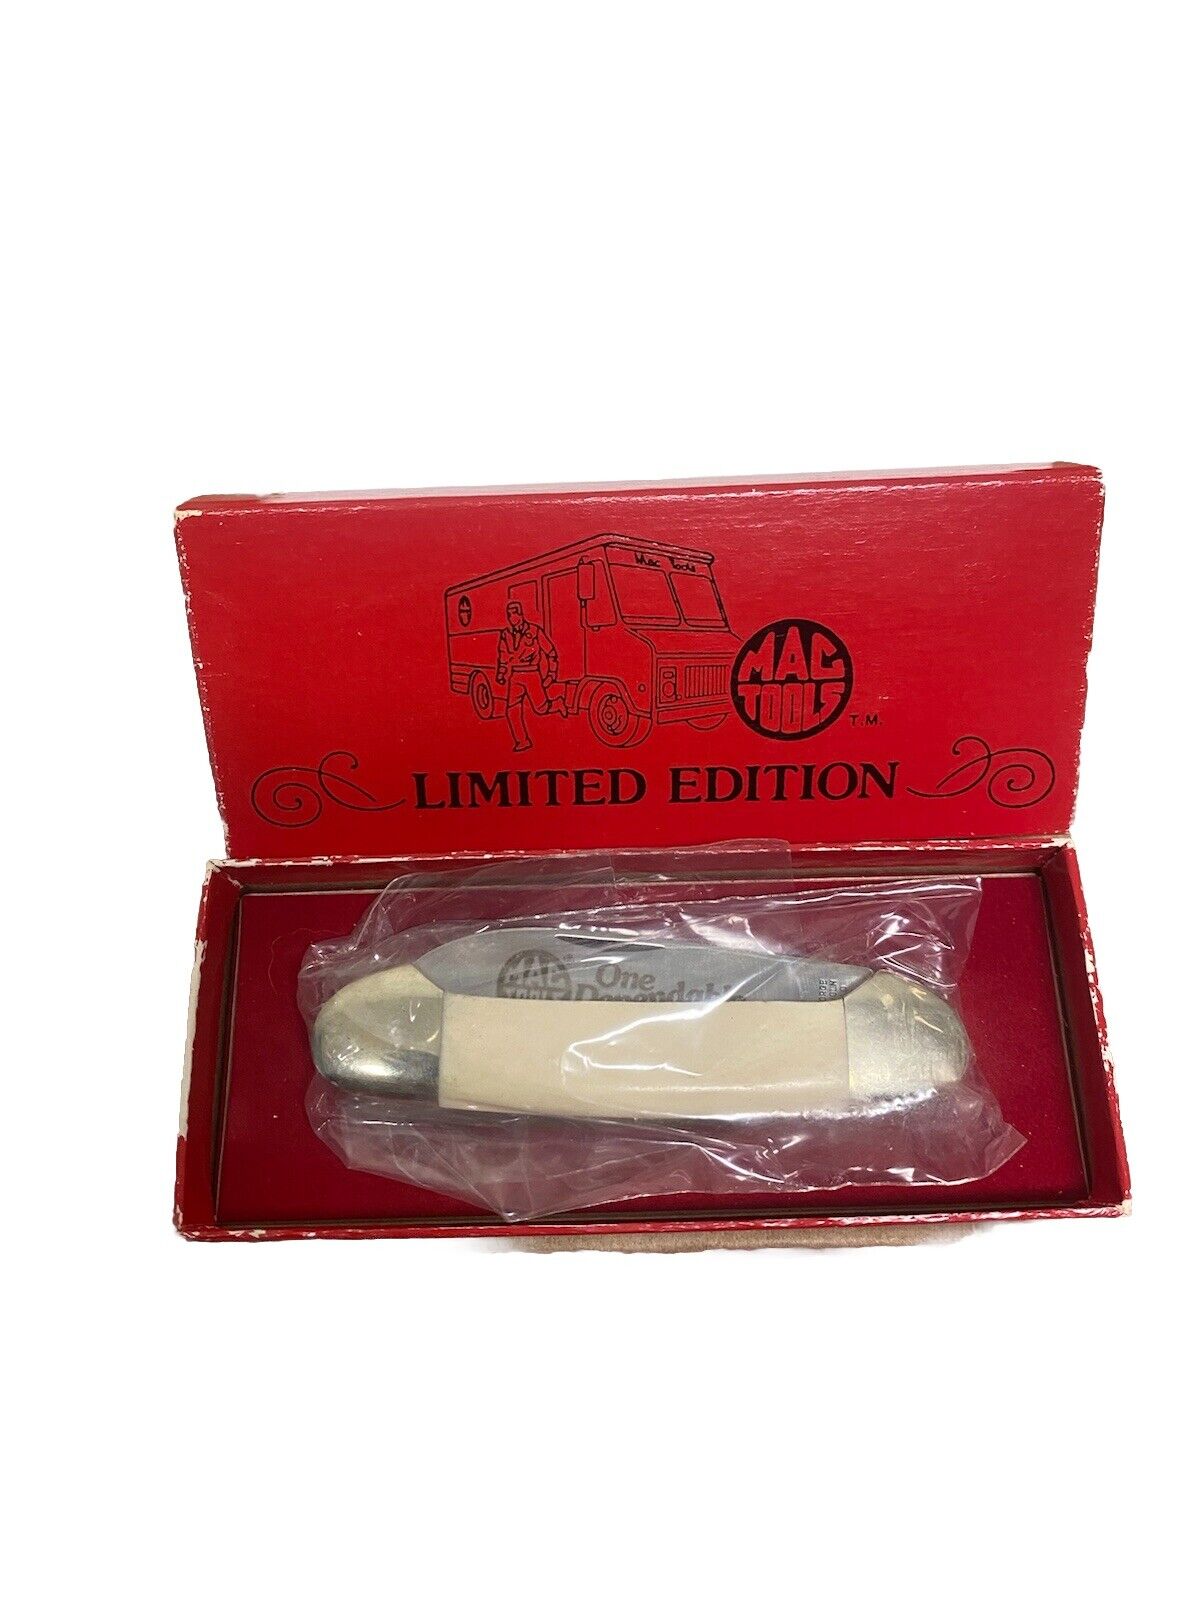 Vintage MAC TOOLS LIMITED EDITION POCKET KNIFE-IXL ENGLISH Bone Pearl Handle